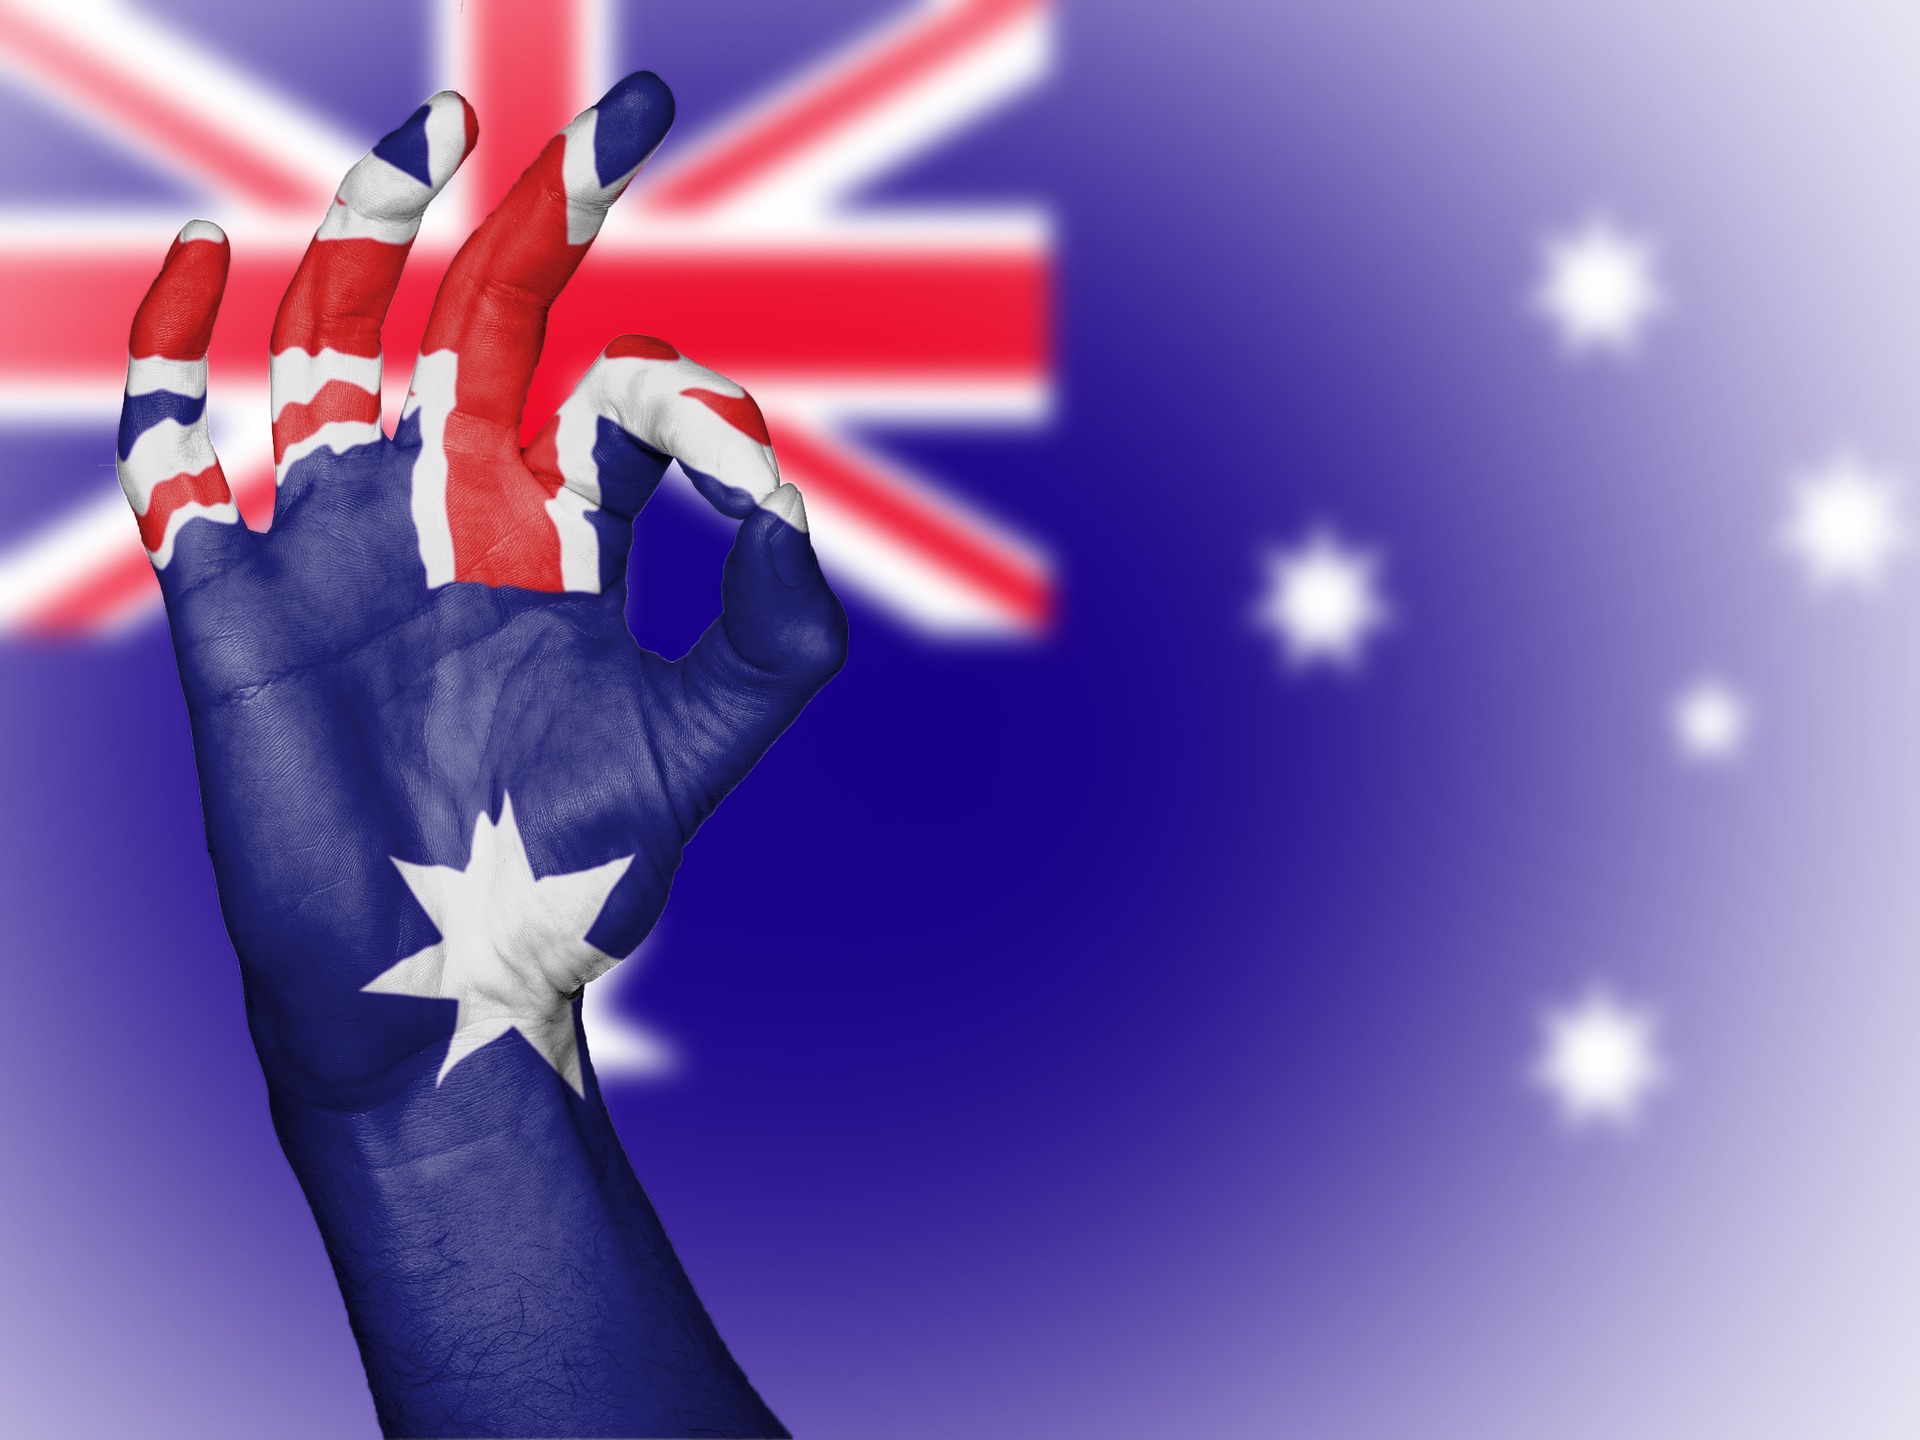 Benefits of being an Australian permanent resident